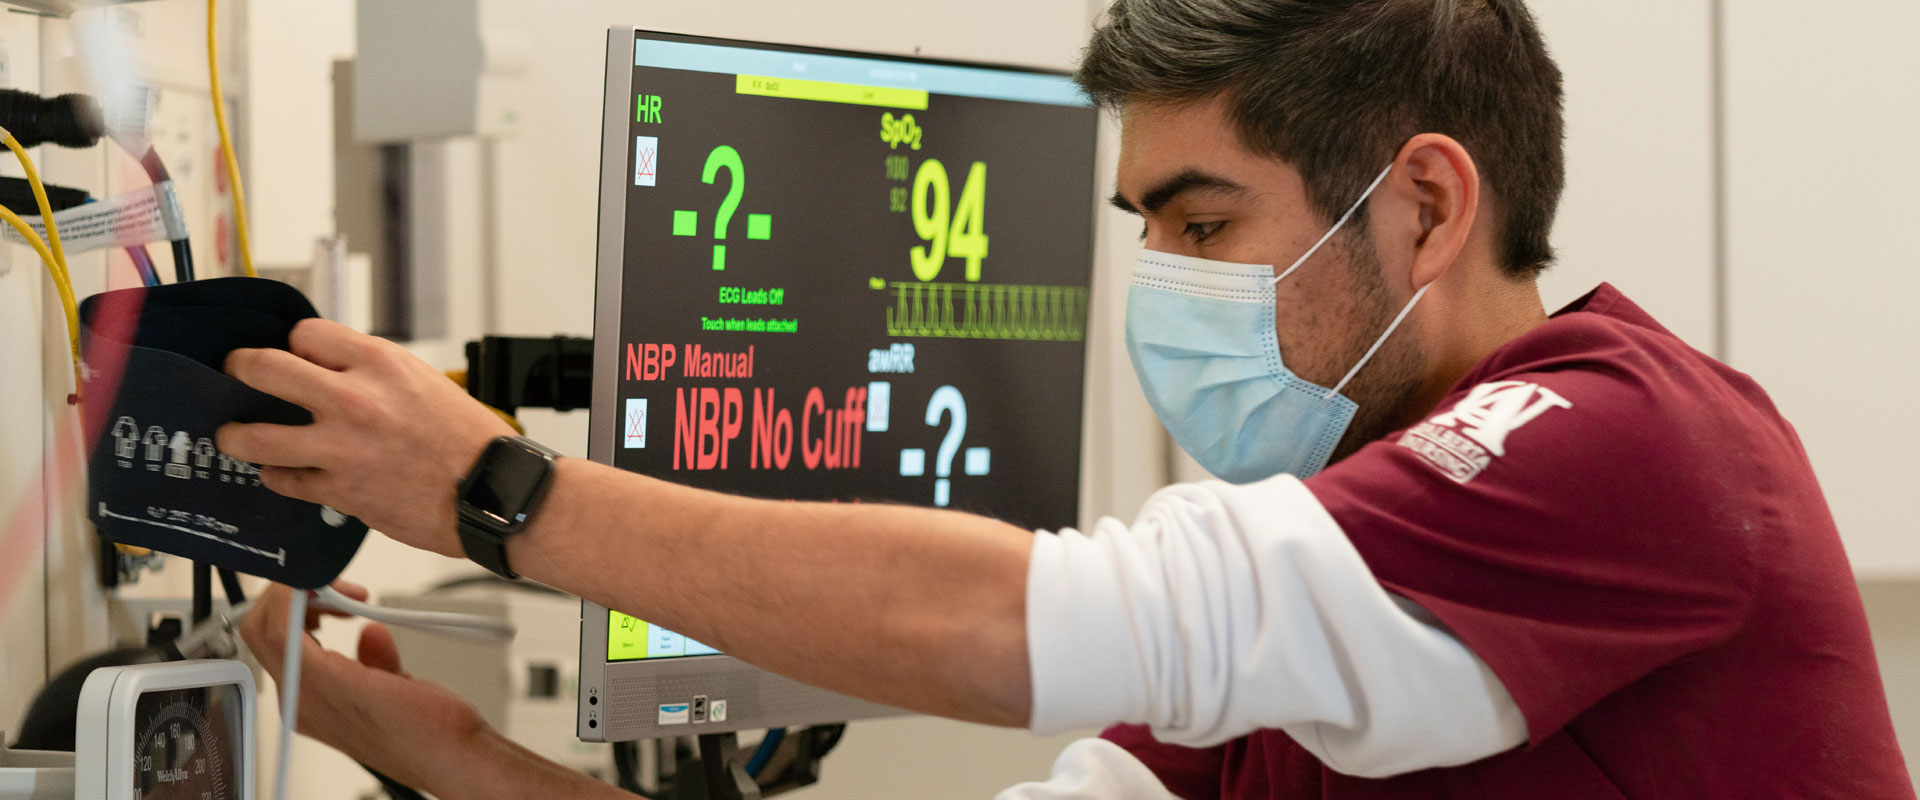 Male nursing student reaching for blood pressure sleeve